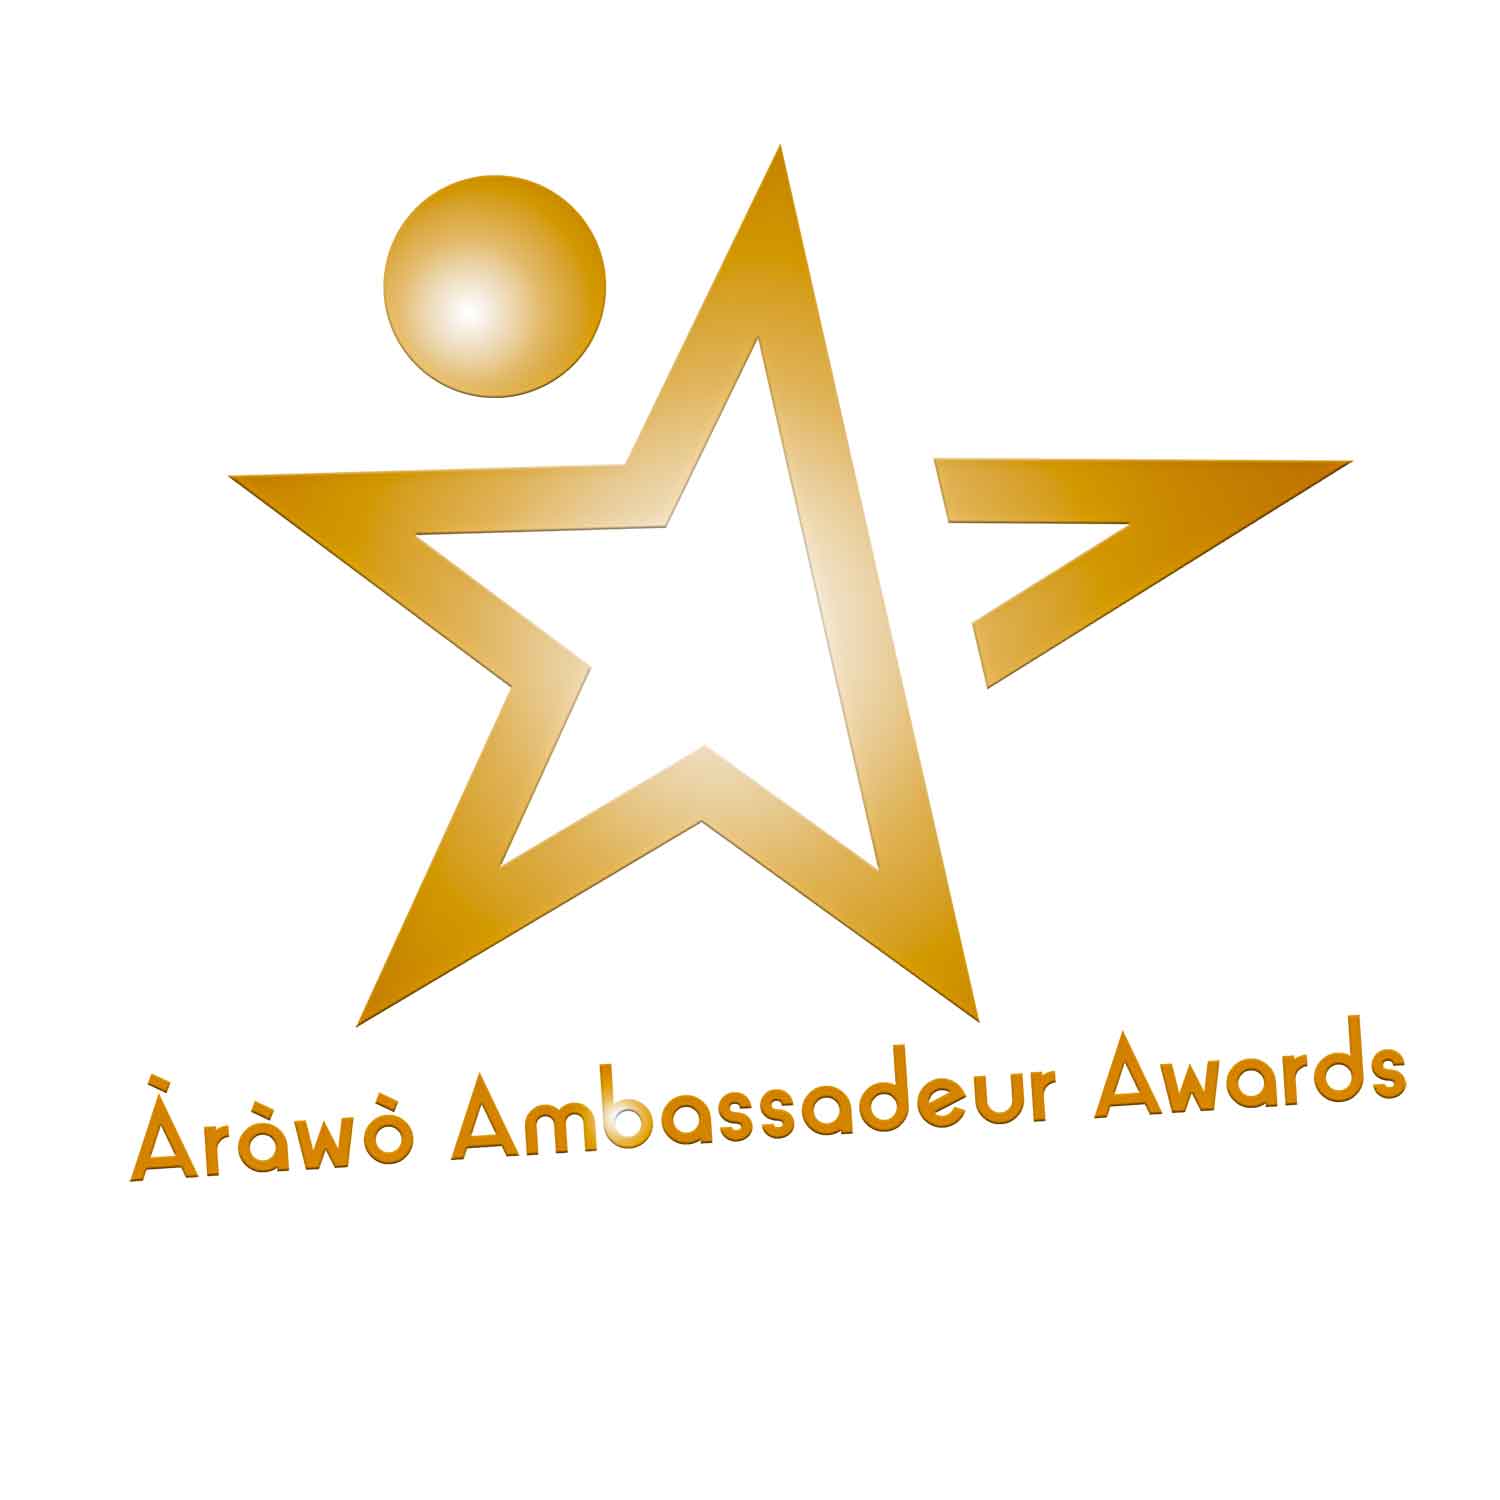 ARAWO AMBASSADEUR AWARDS